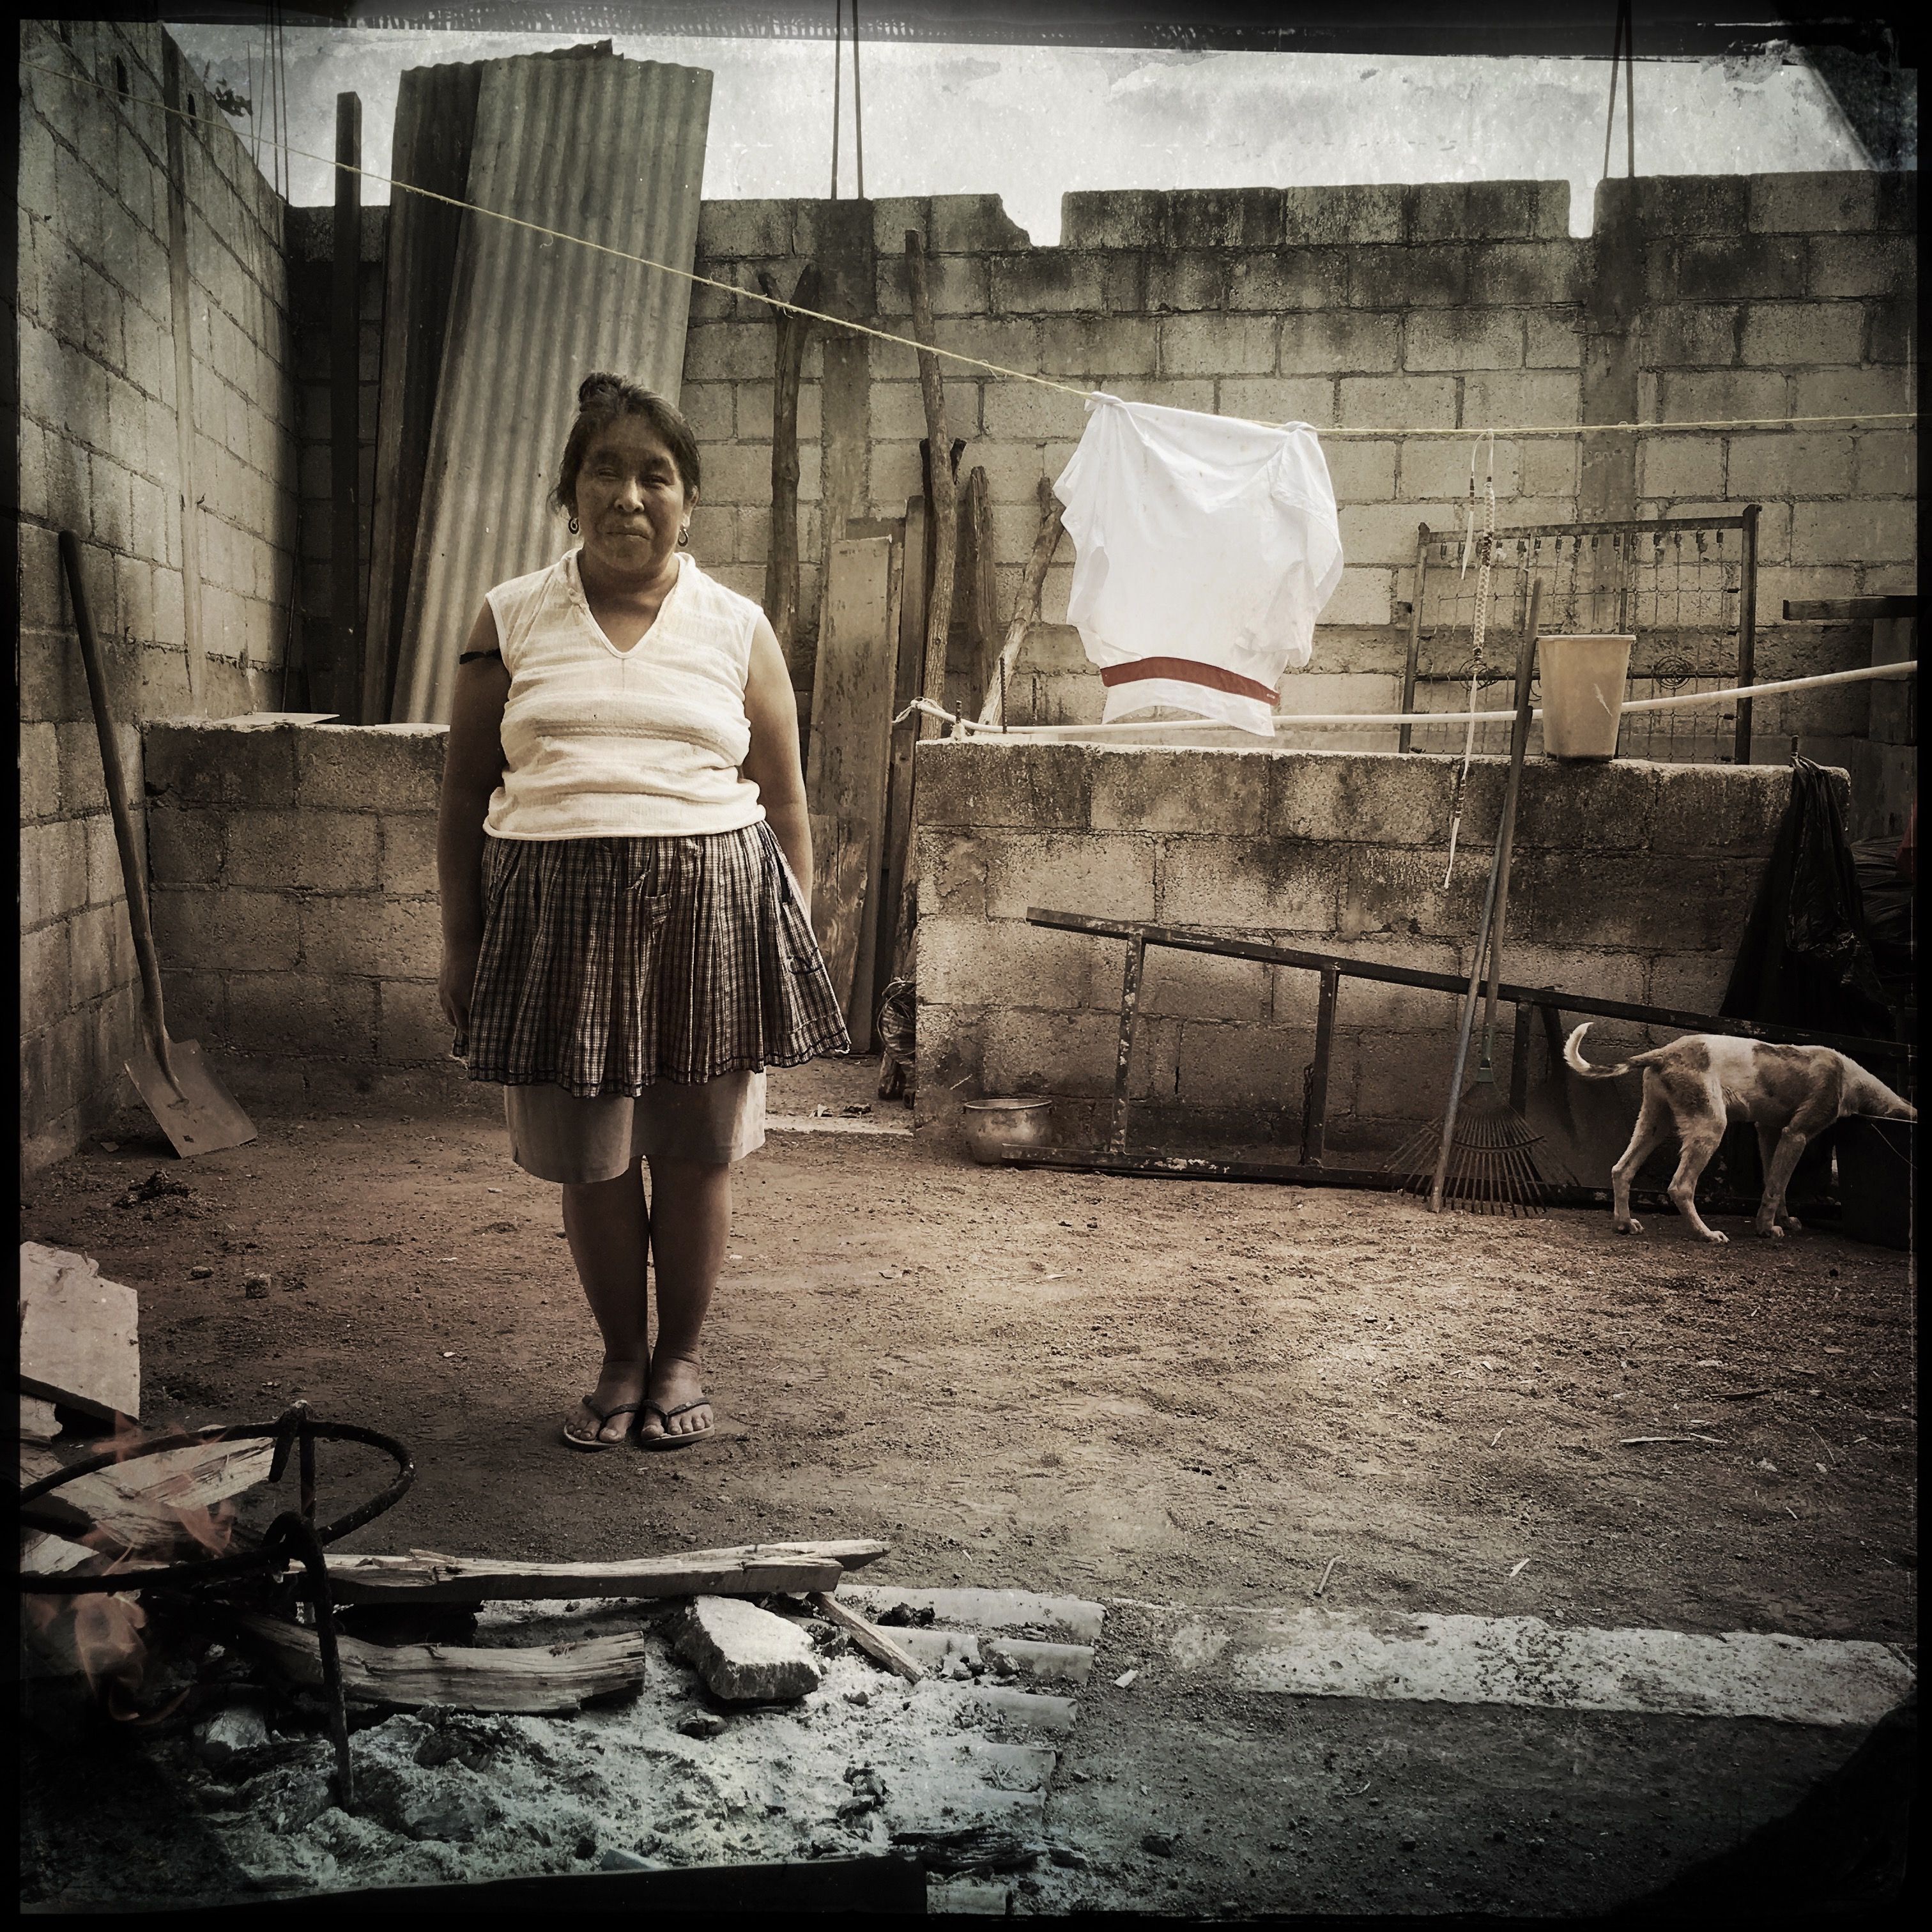 In San Antonio Aguas Calientes, Guatemala, Maria Ermelinda Lopez Mendoza stands near the cooking area in her courtyard. Photo by Lynn Johnson. Guatemala, 2017.